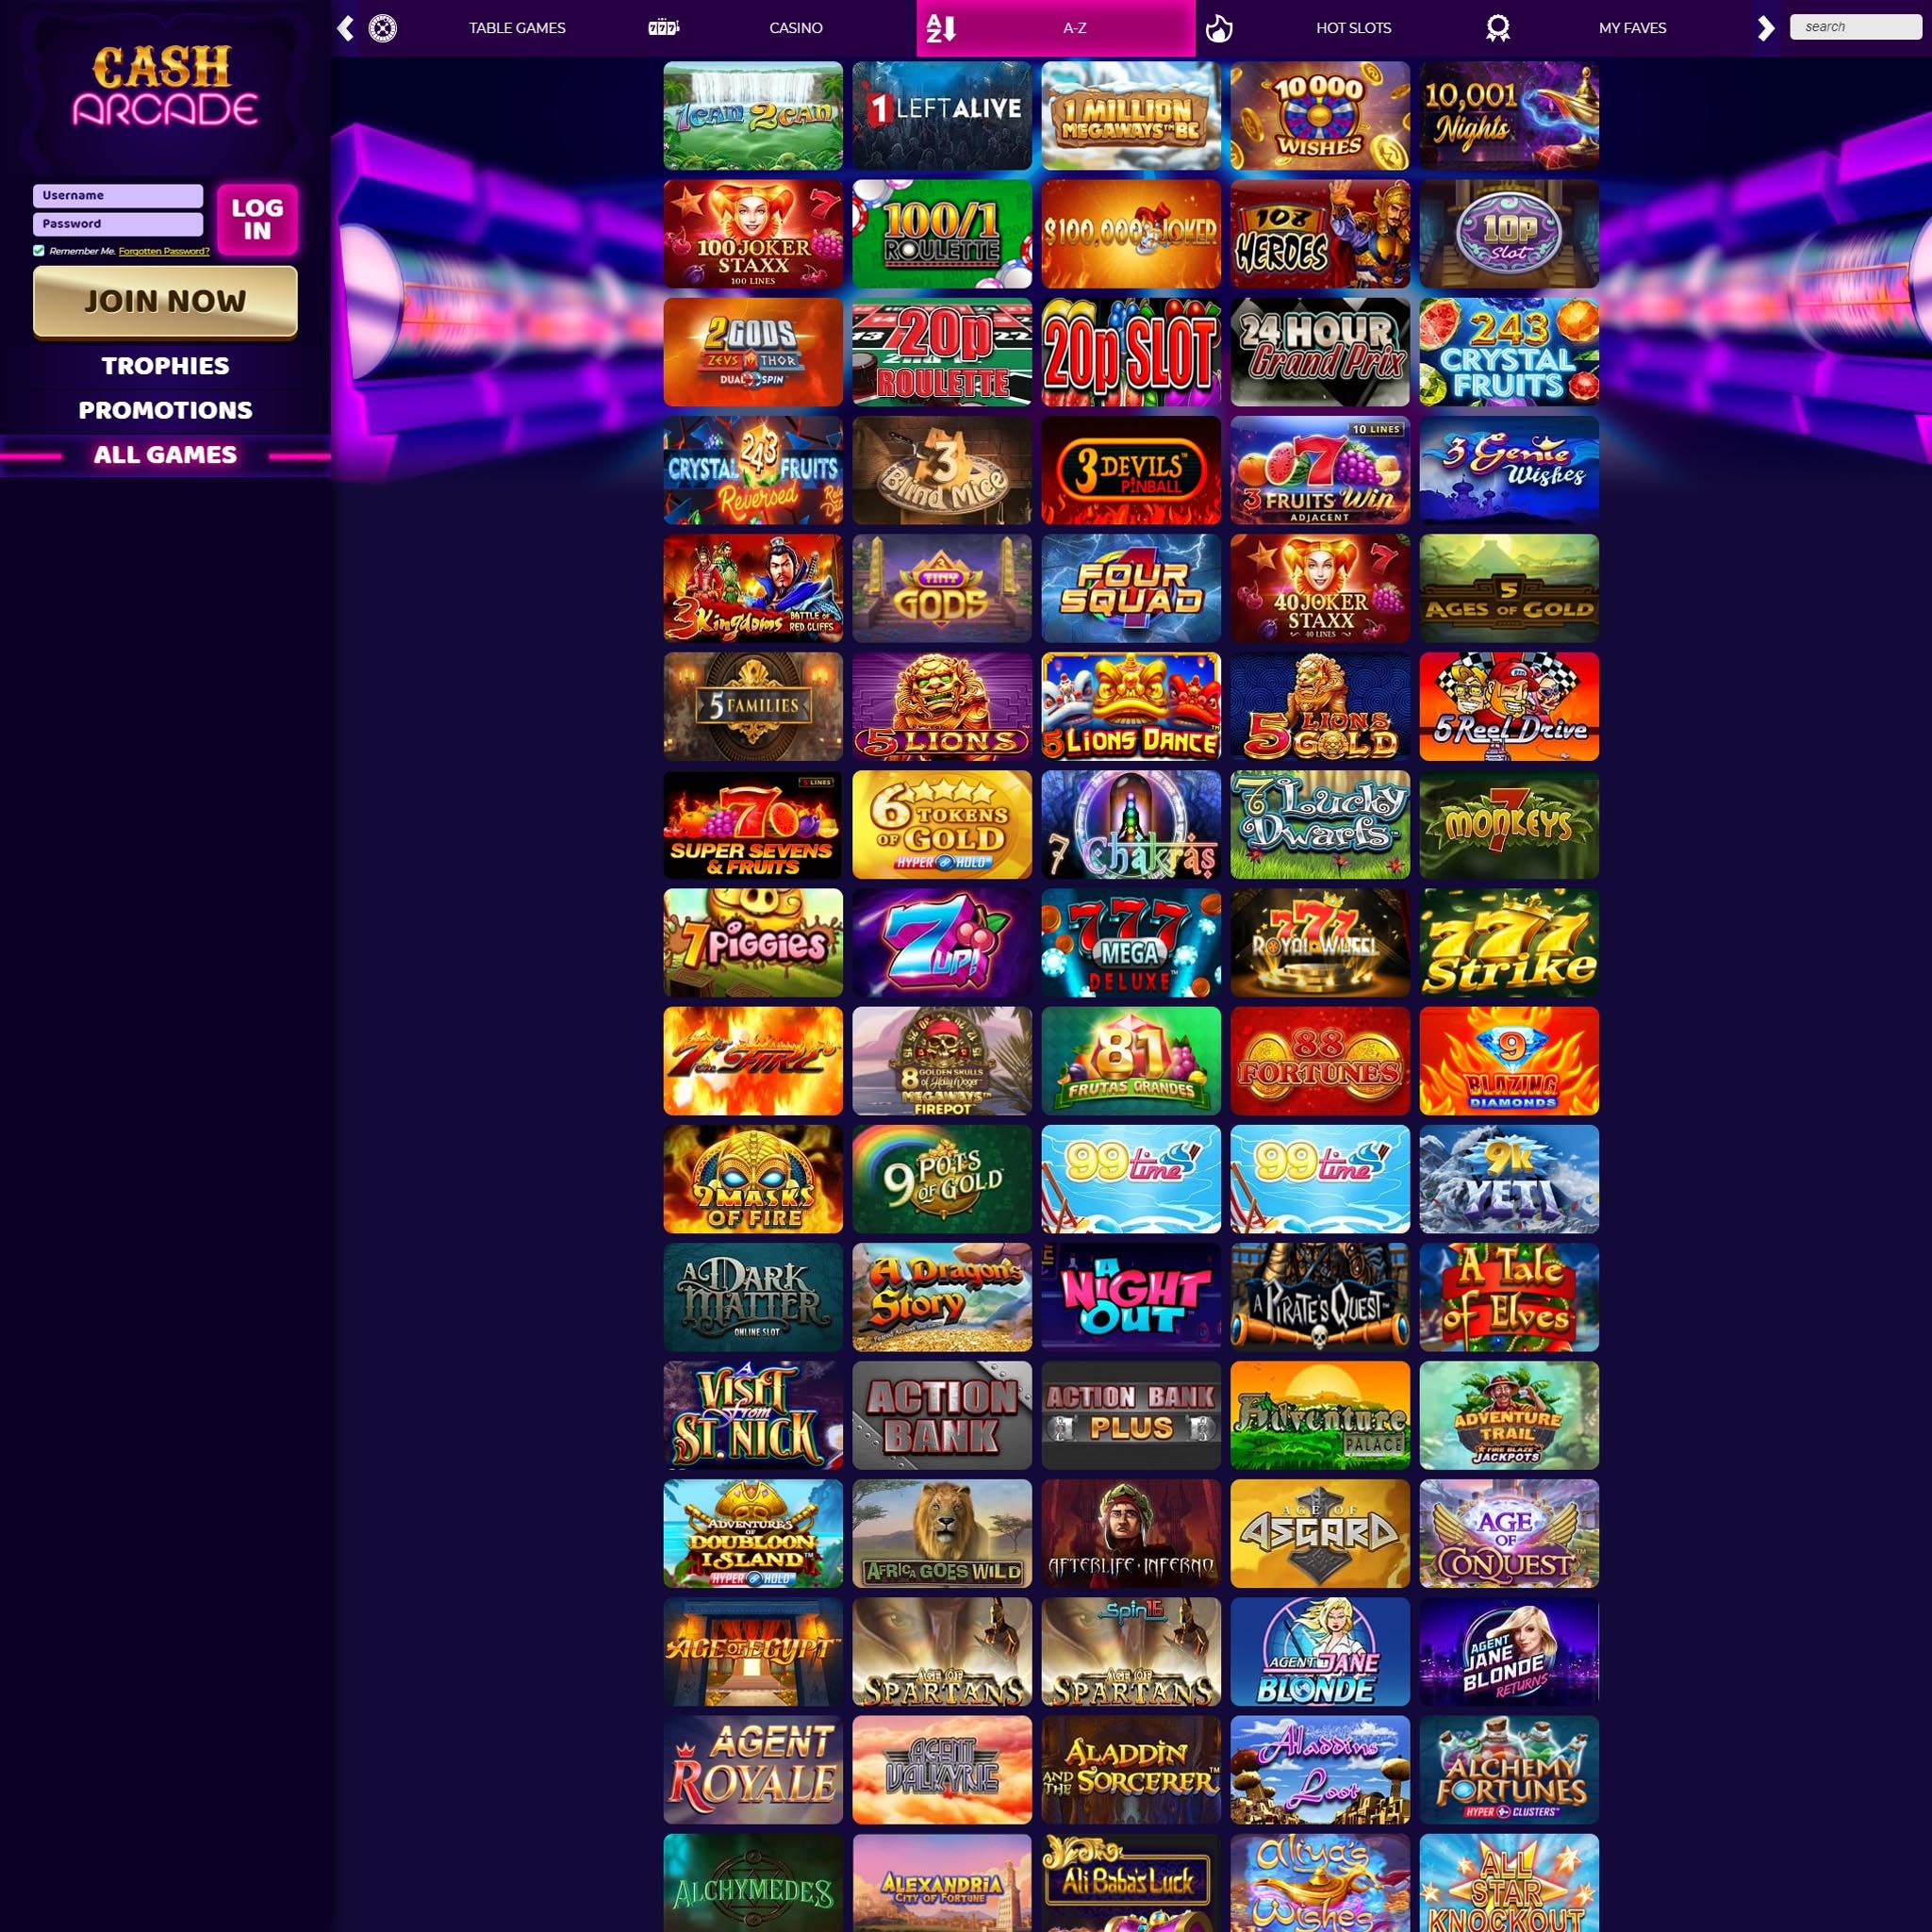 Cash Arcade Casino full games catalogue